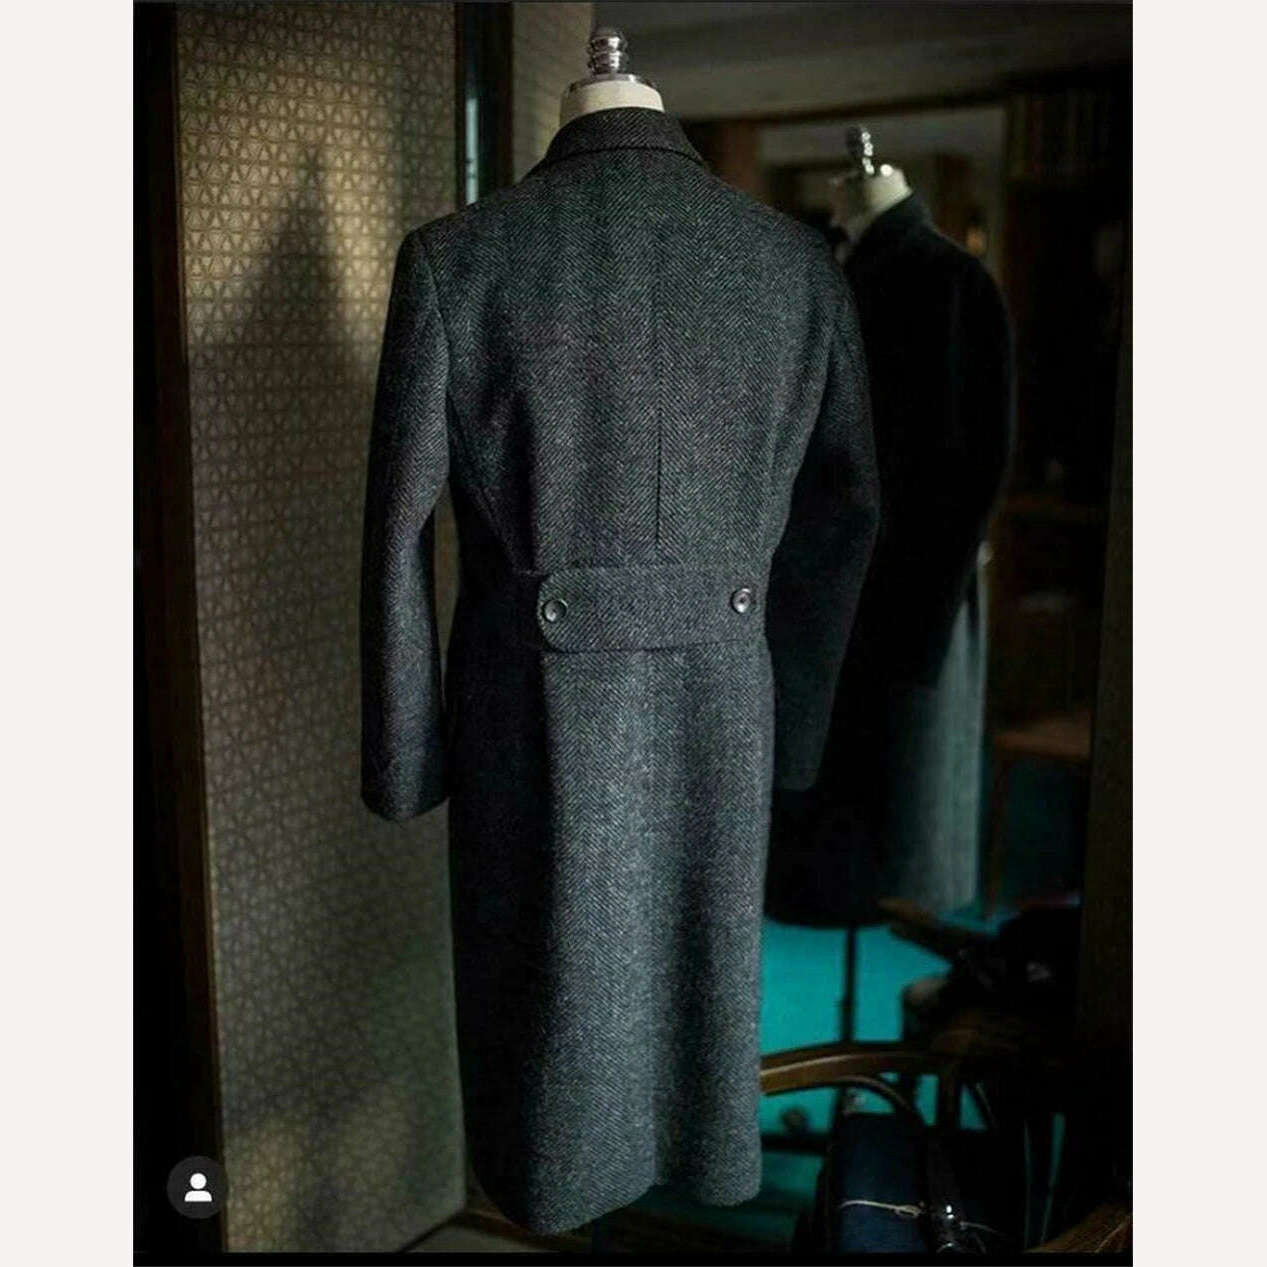 KIMLUD, New Vintage Tweed Men's Long Jackets Business Formal Man Suit Blazer Lapel Herringbone Costume Homme Tuxedo, KIMLUD Women's Clothes